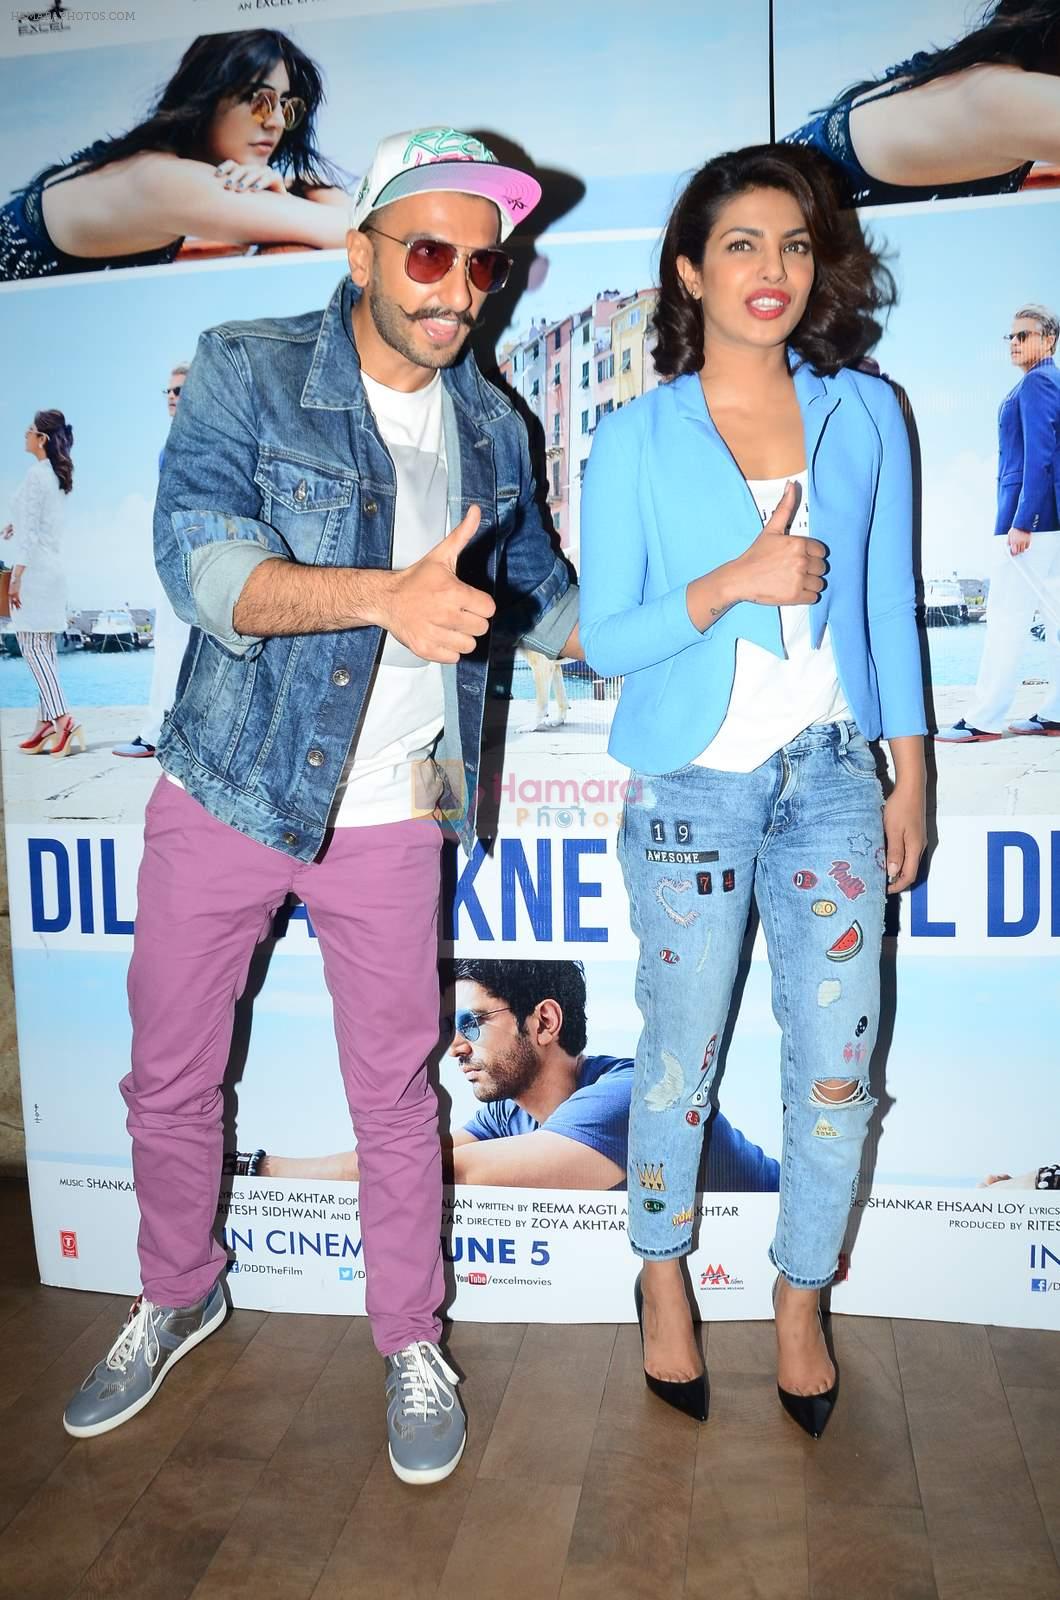 Priyanka Chopra,Ranveer Singh at Dil Dhadakne Do screening in Mumbai on 28th May 2015